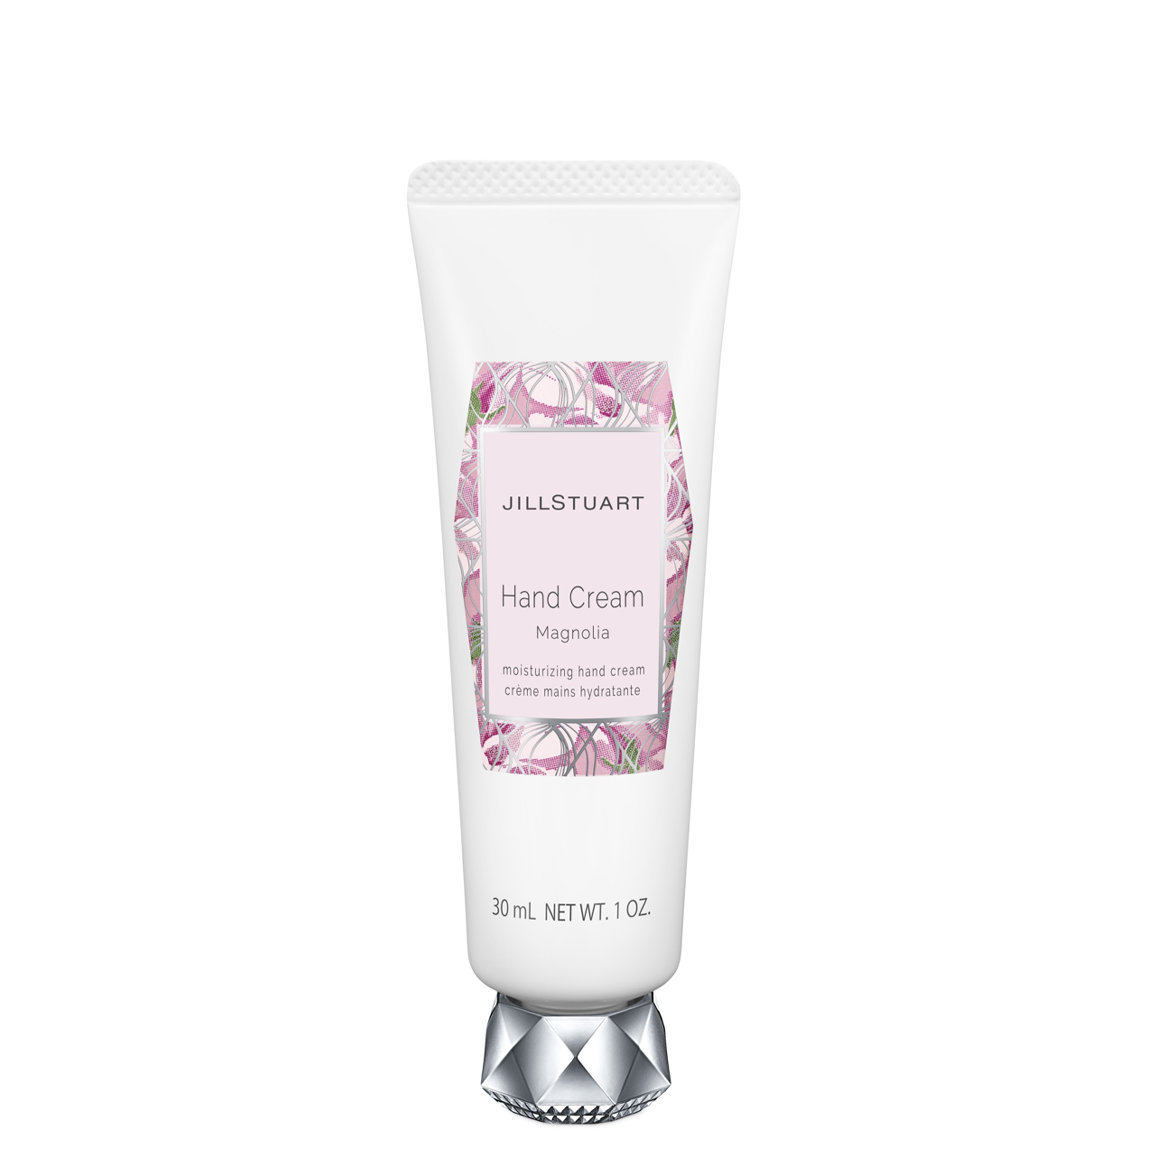 JILL STUART Beauty Hand Cream - Magnolia alternative view 1 - product swatch.